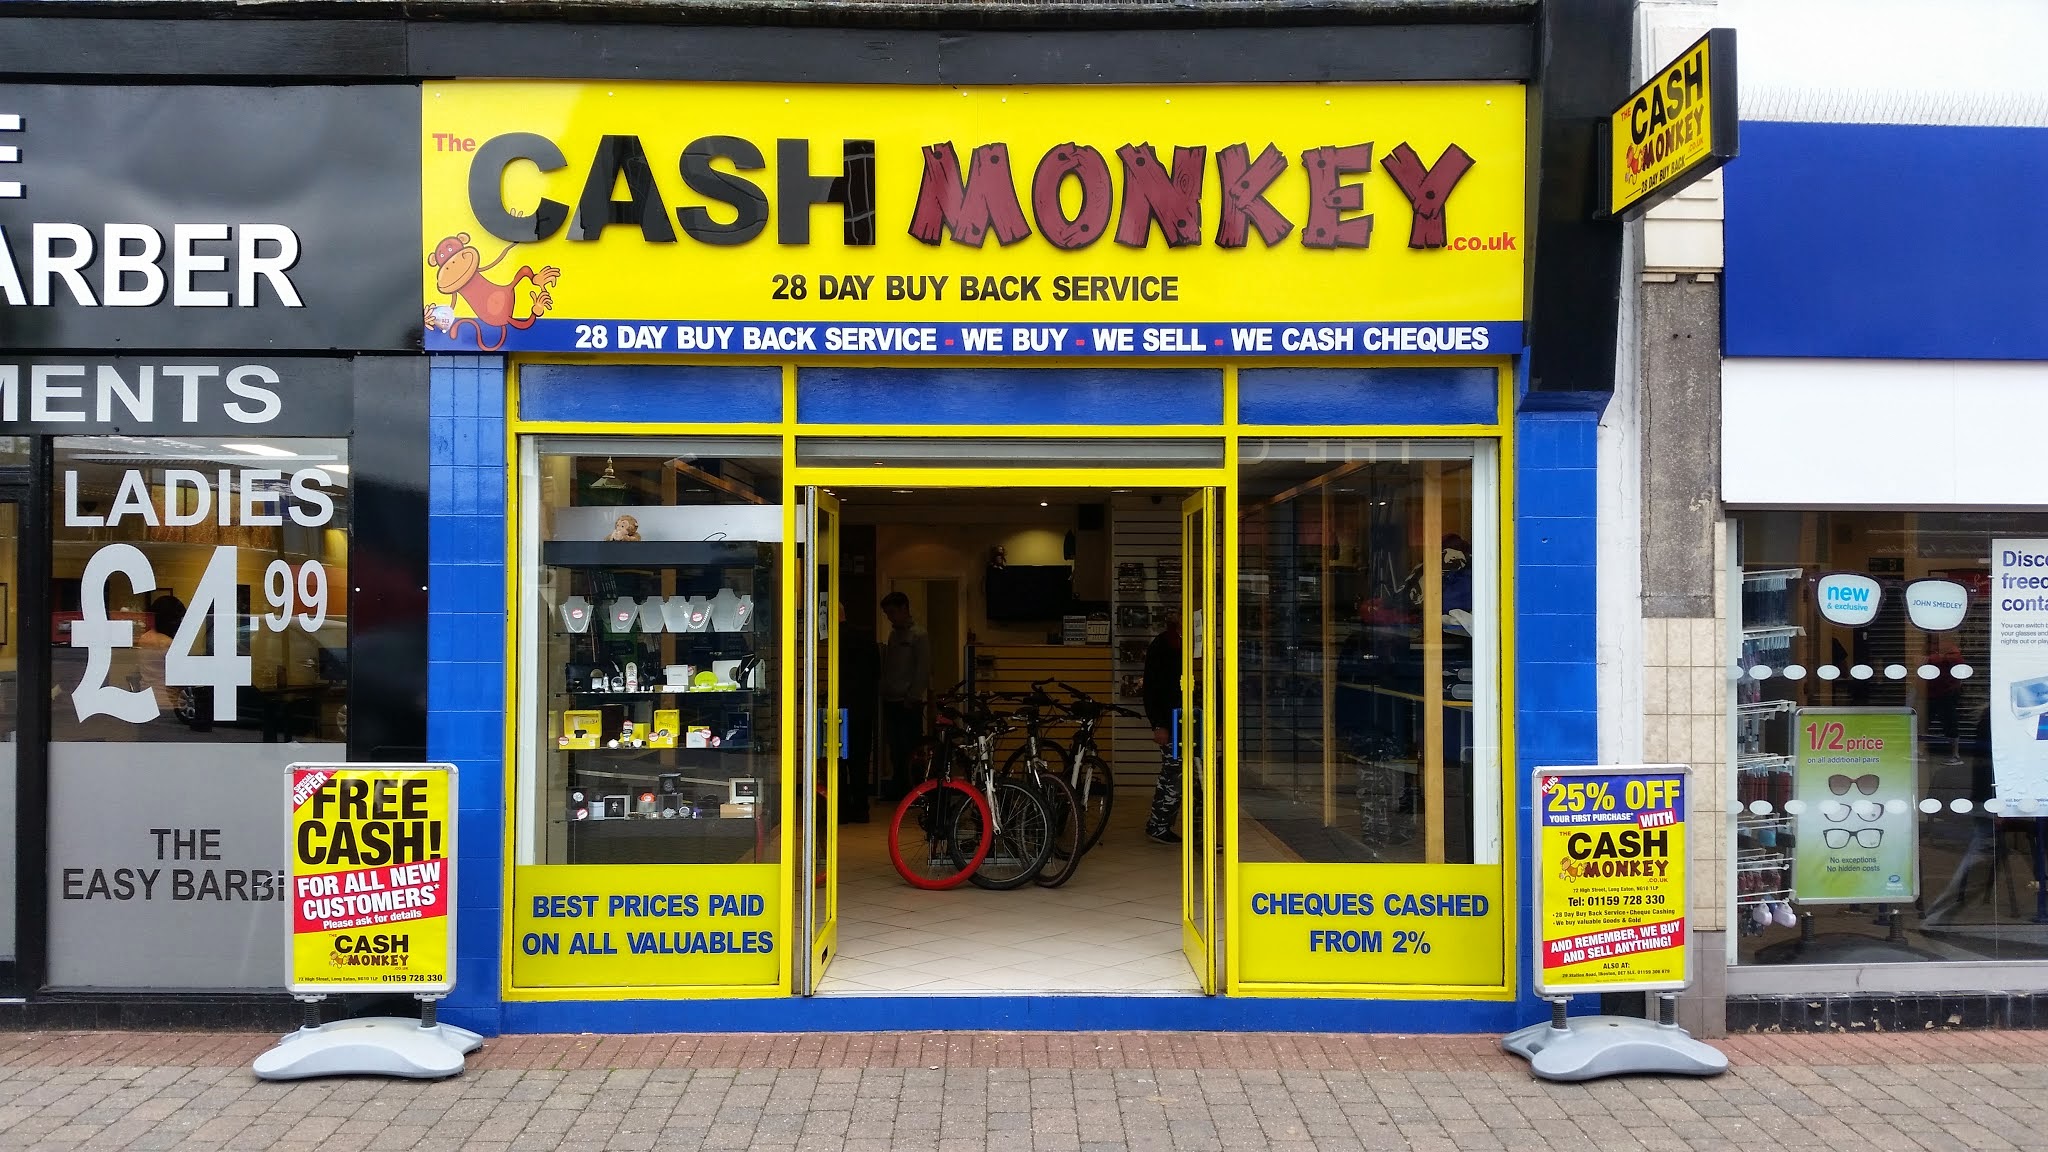 Cash Monkey Long Eaton 01